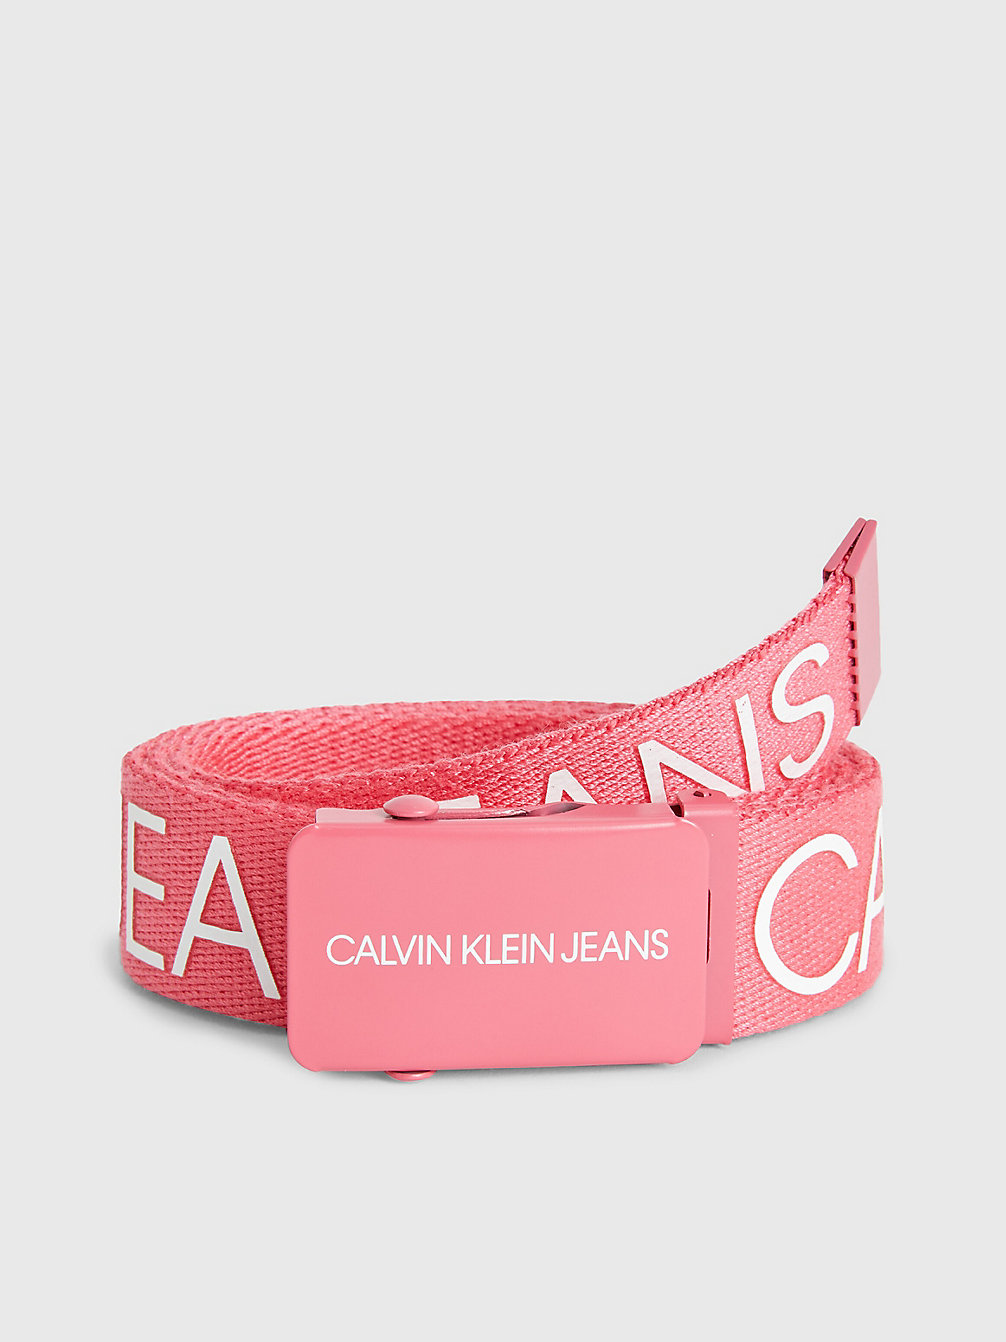 Cinturón Infantil De Lona Con Logo > PINK FLASH > undefined girls > Calvin Klein